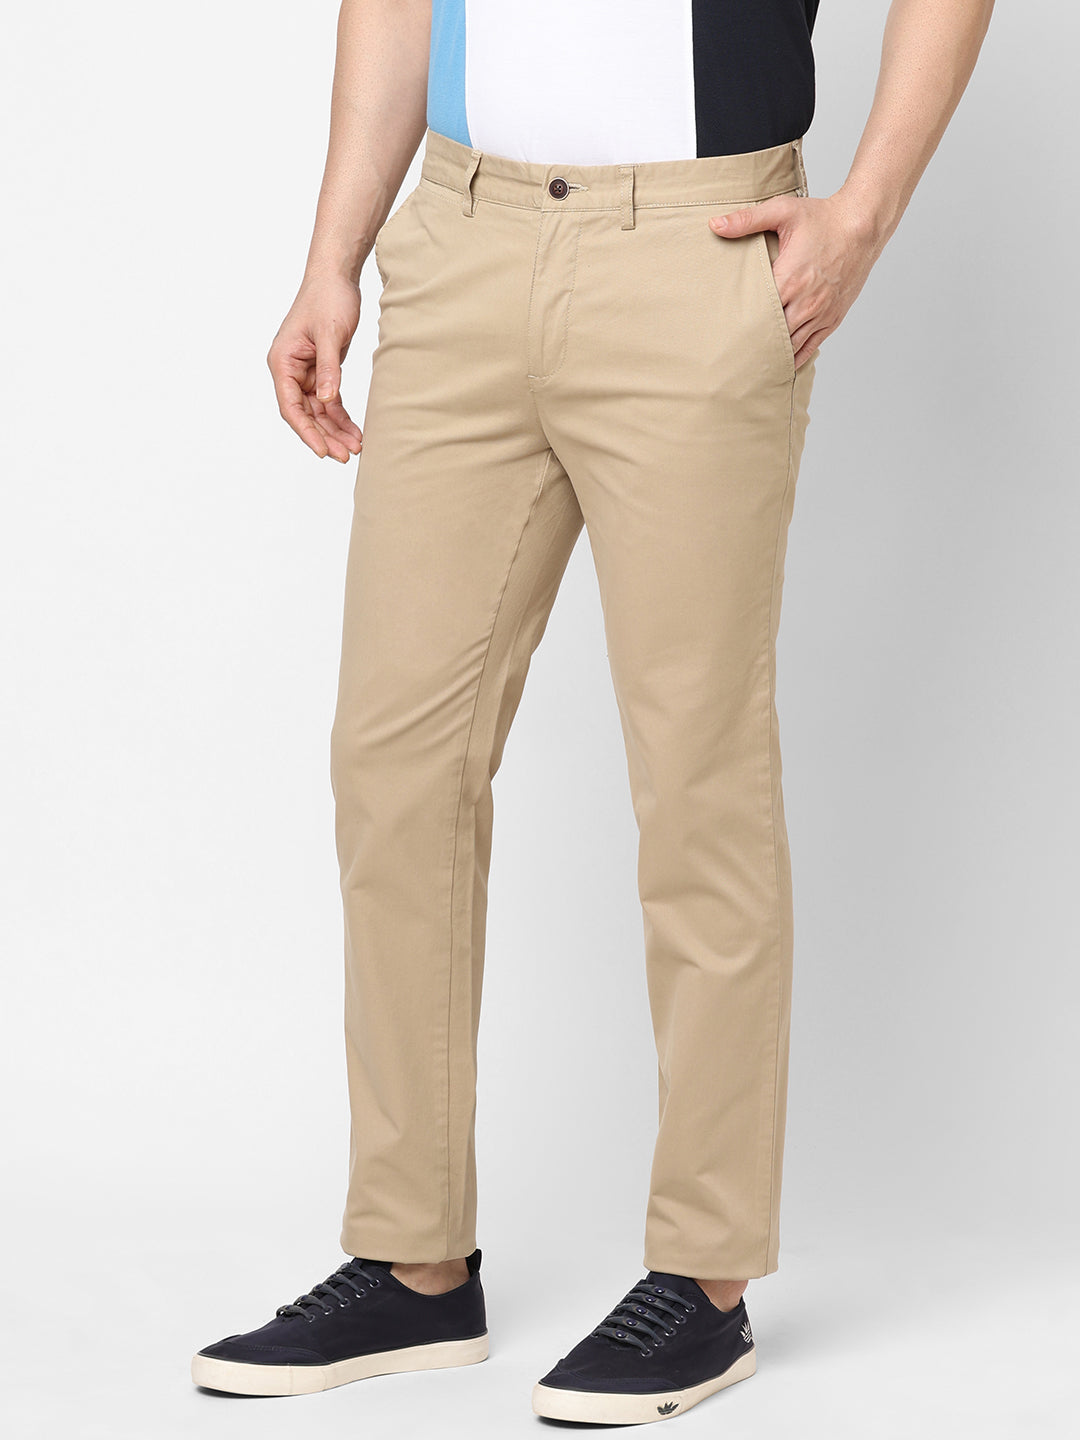 Buy Mens Cotton Lycra Casual Wear Regular Fit PantsCottonworld